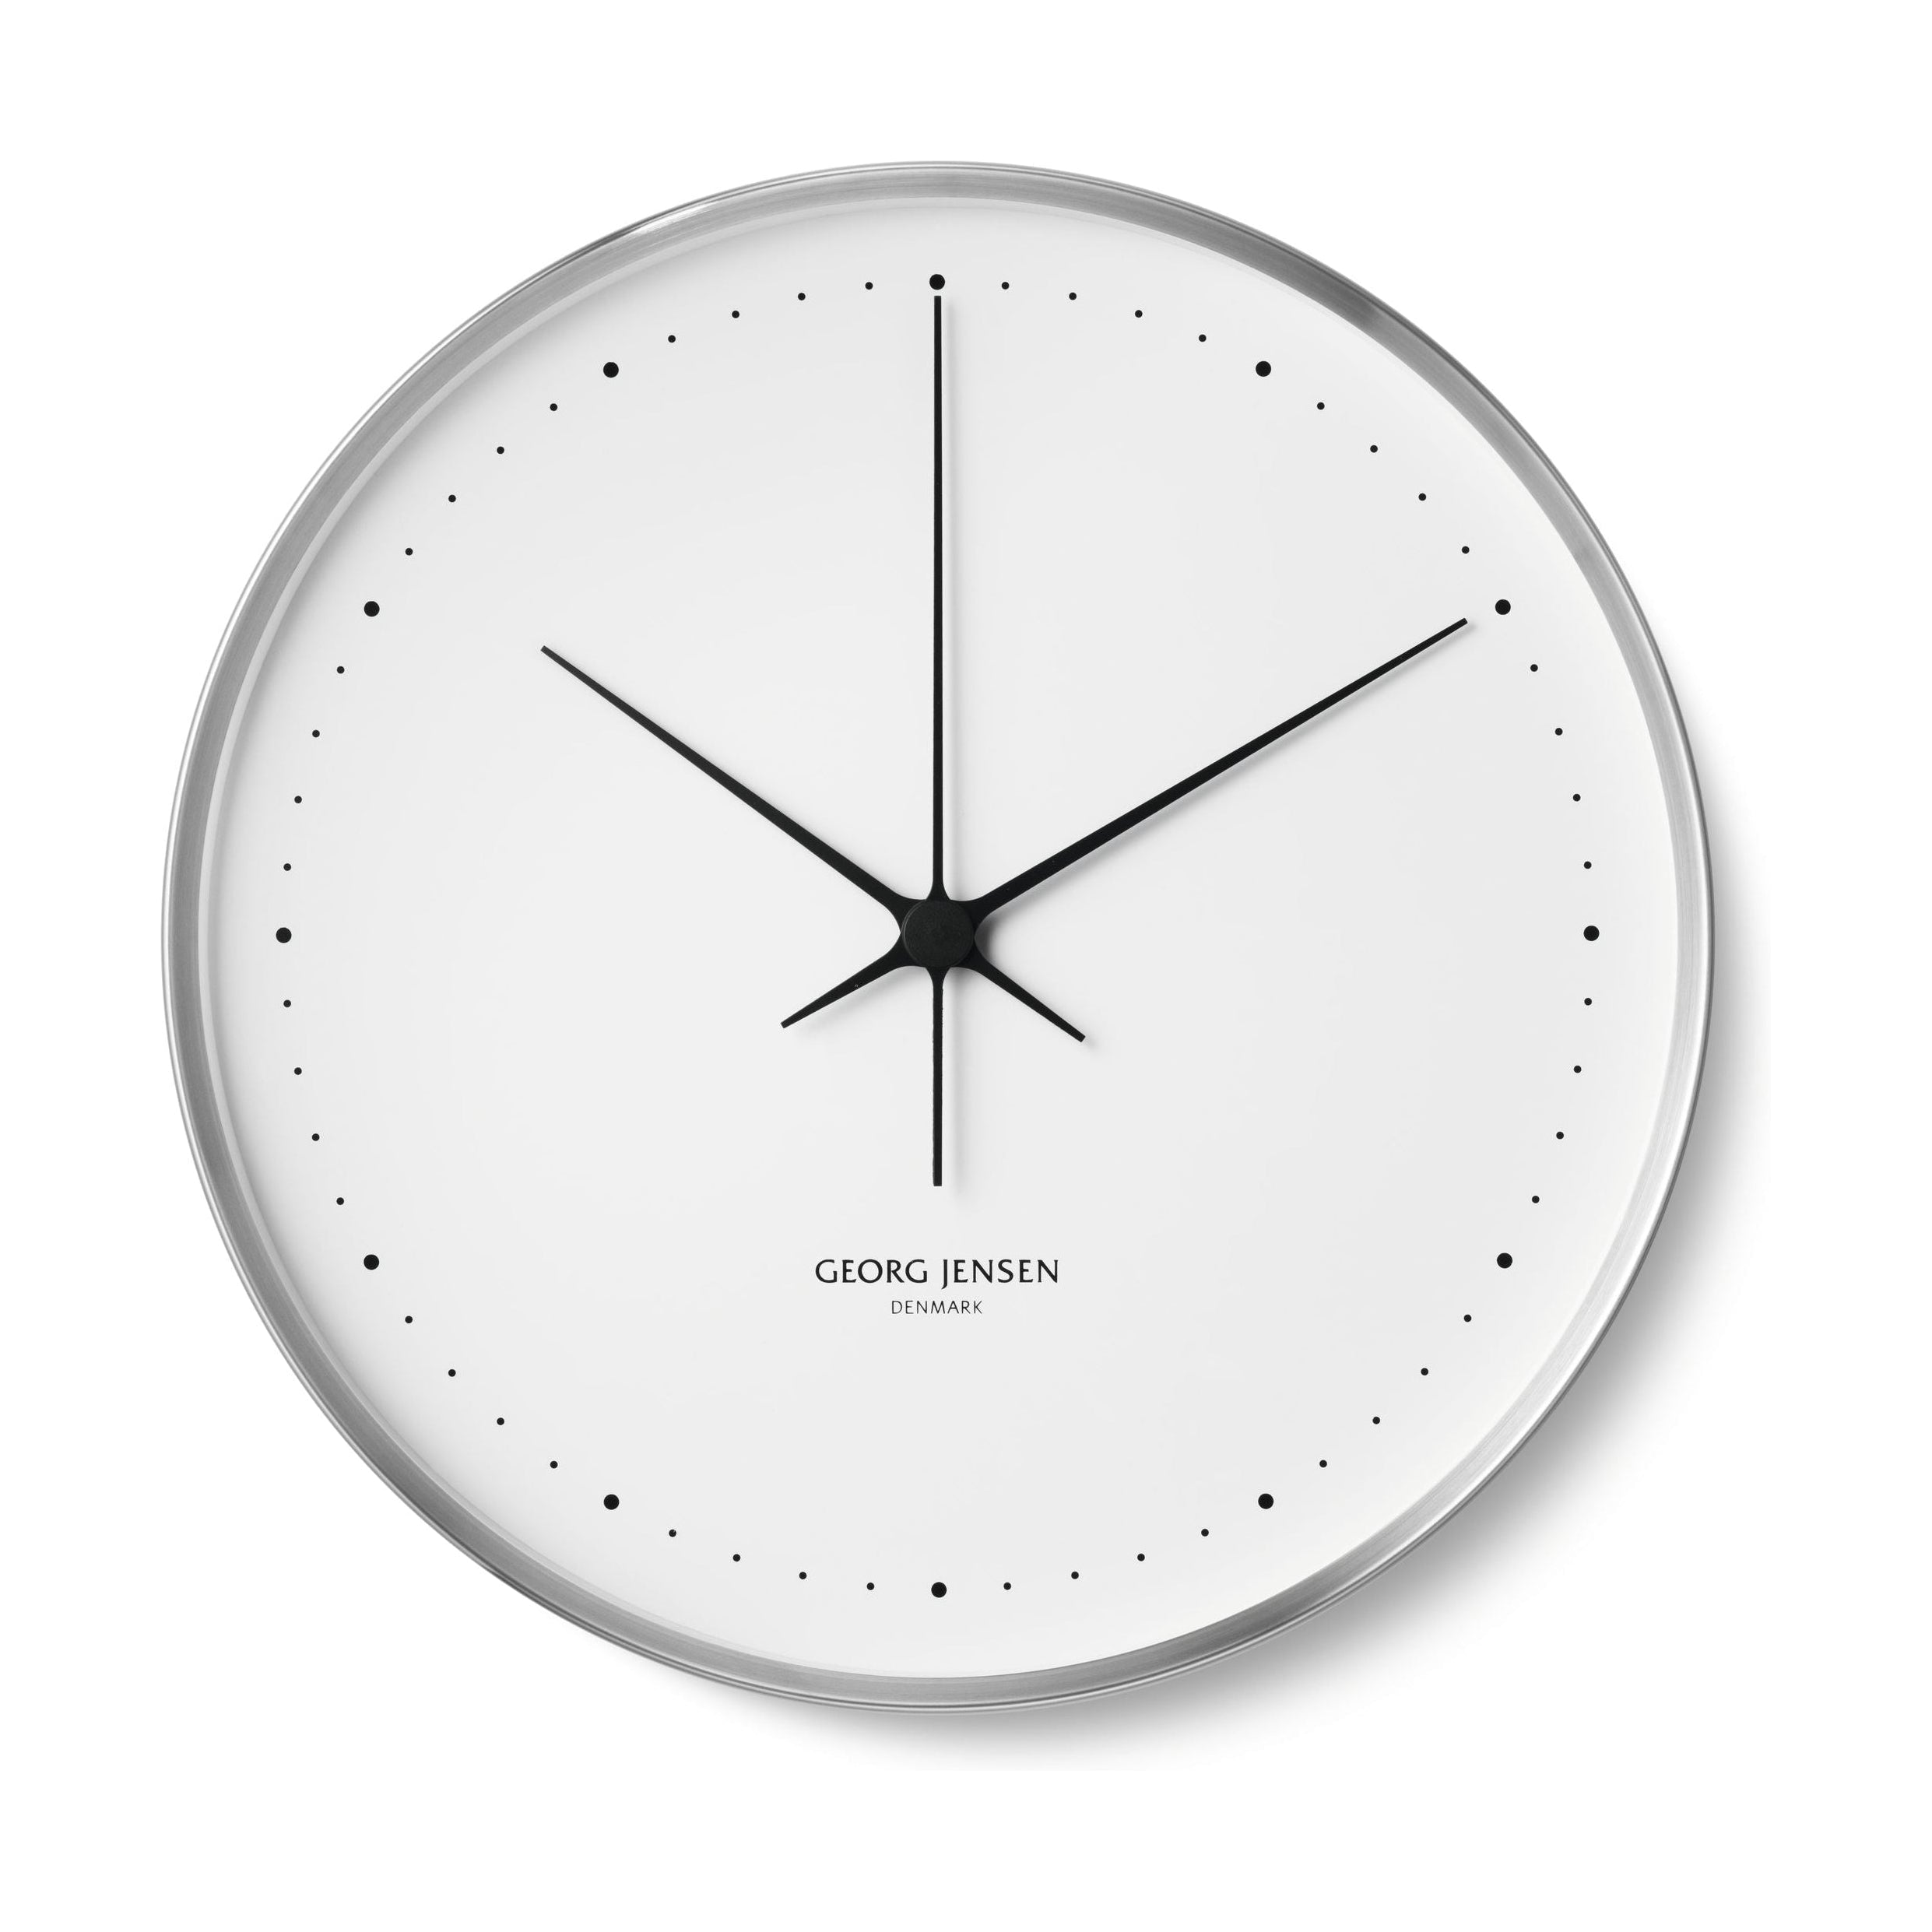 Georg Jensen Henning Koppel Wall horloge blanc, 40 cm